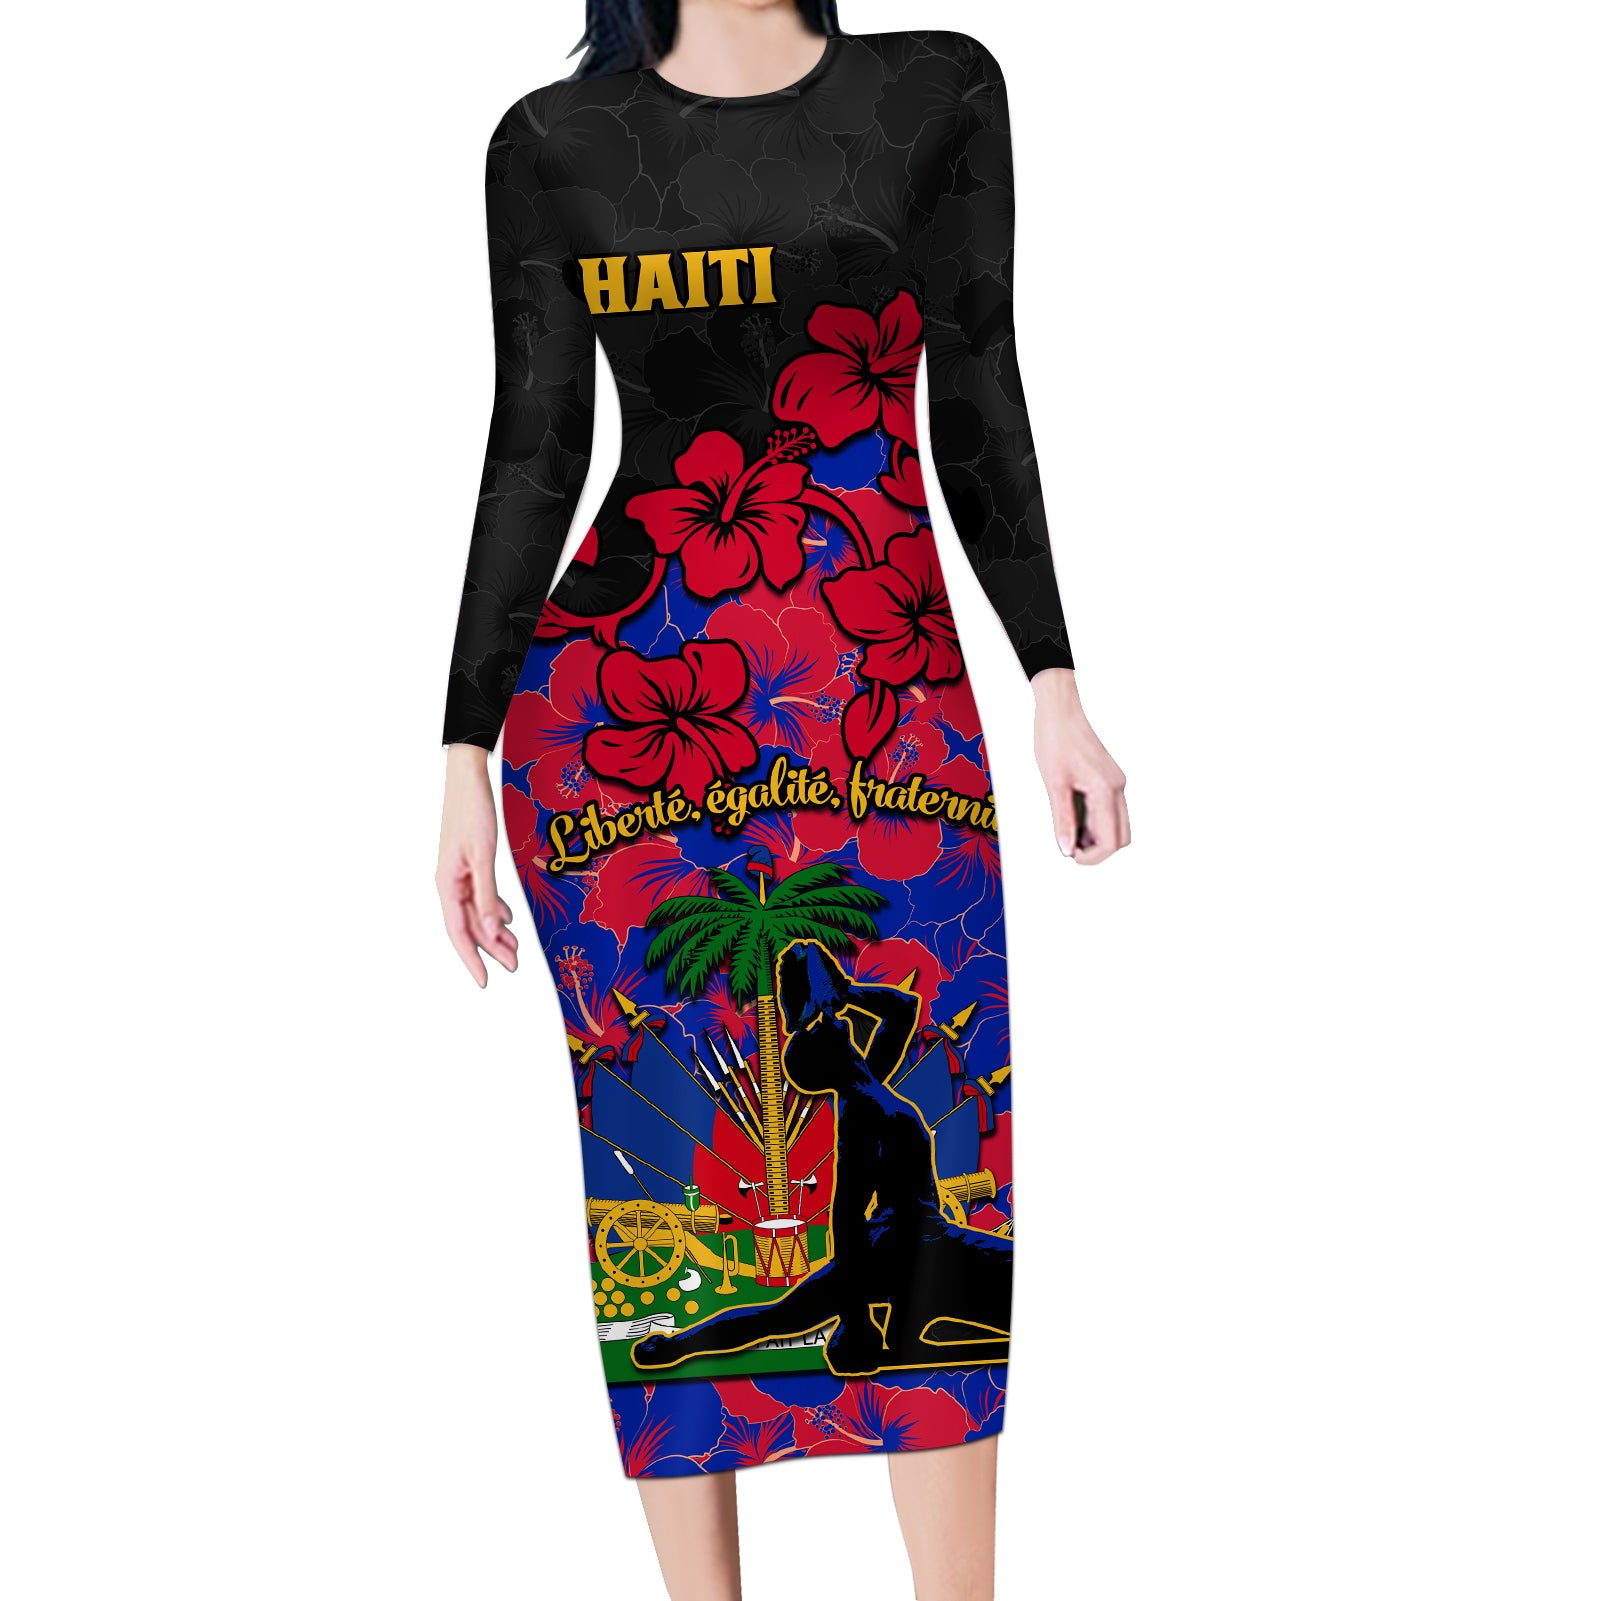 haiti-independence-day-long-sleeve-bodycon-dress-hibiscus-neg-marron